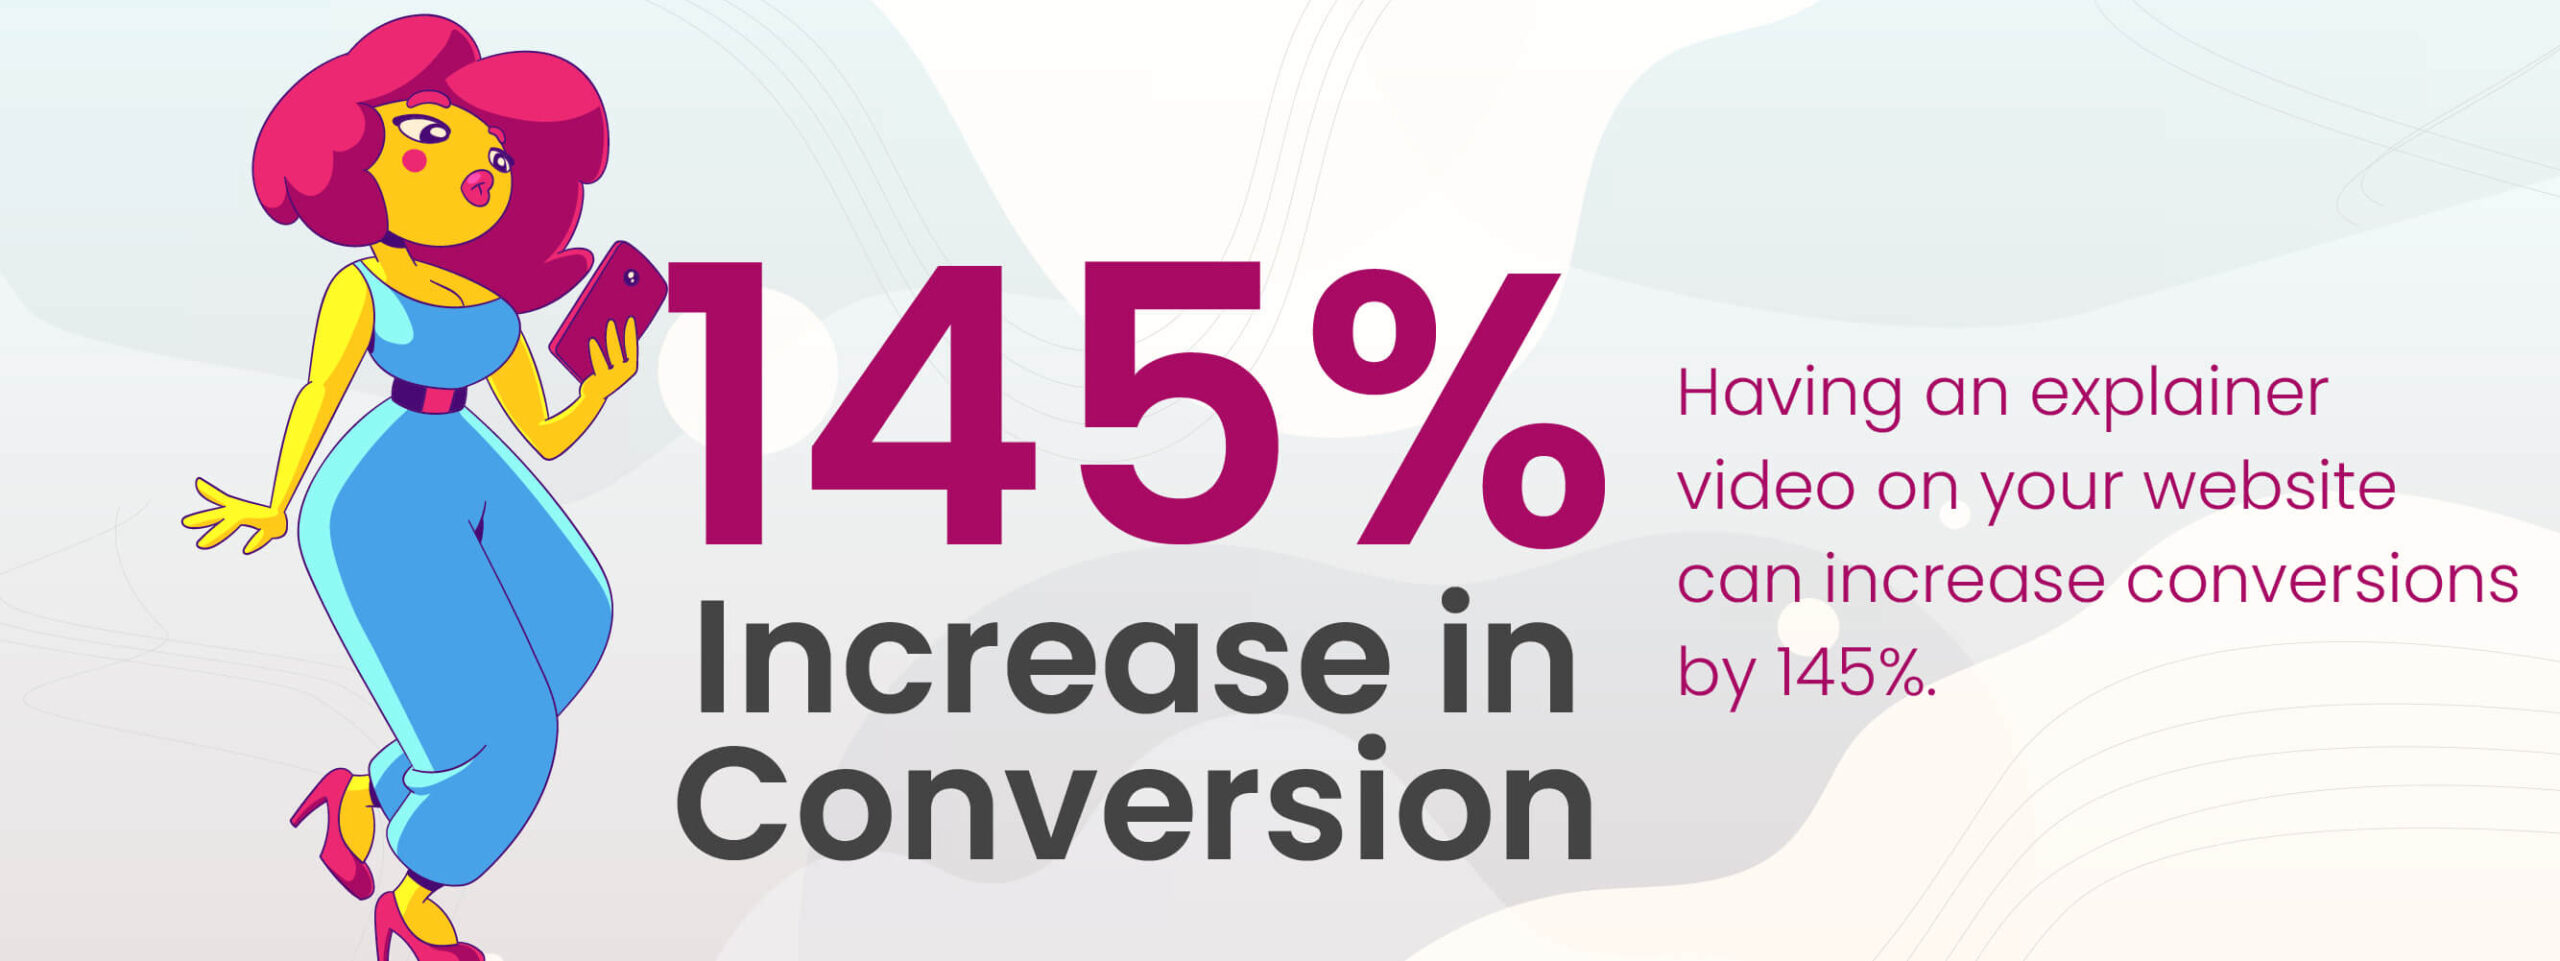 Explainer Videos drive 145% more conversions